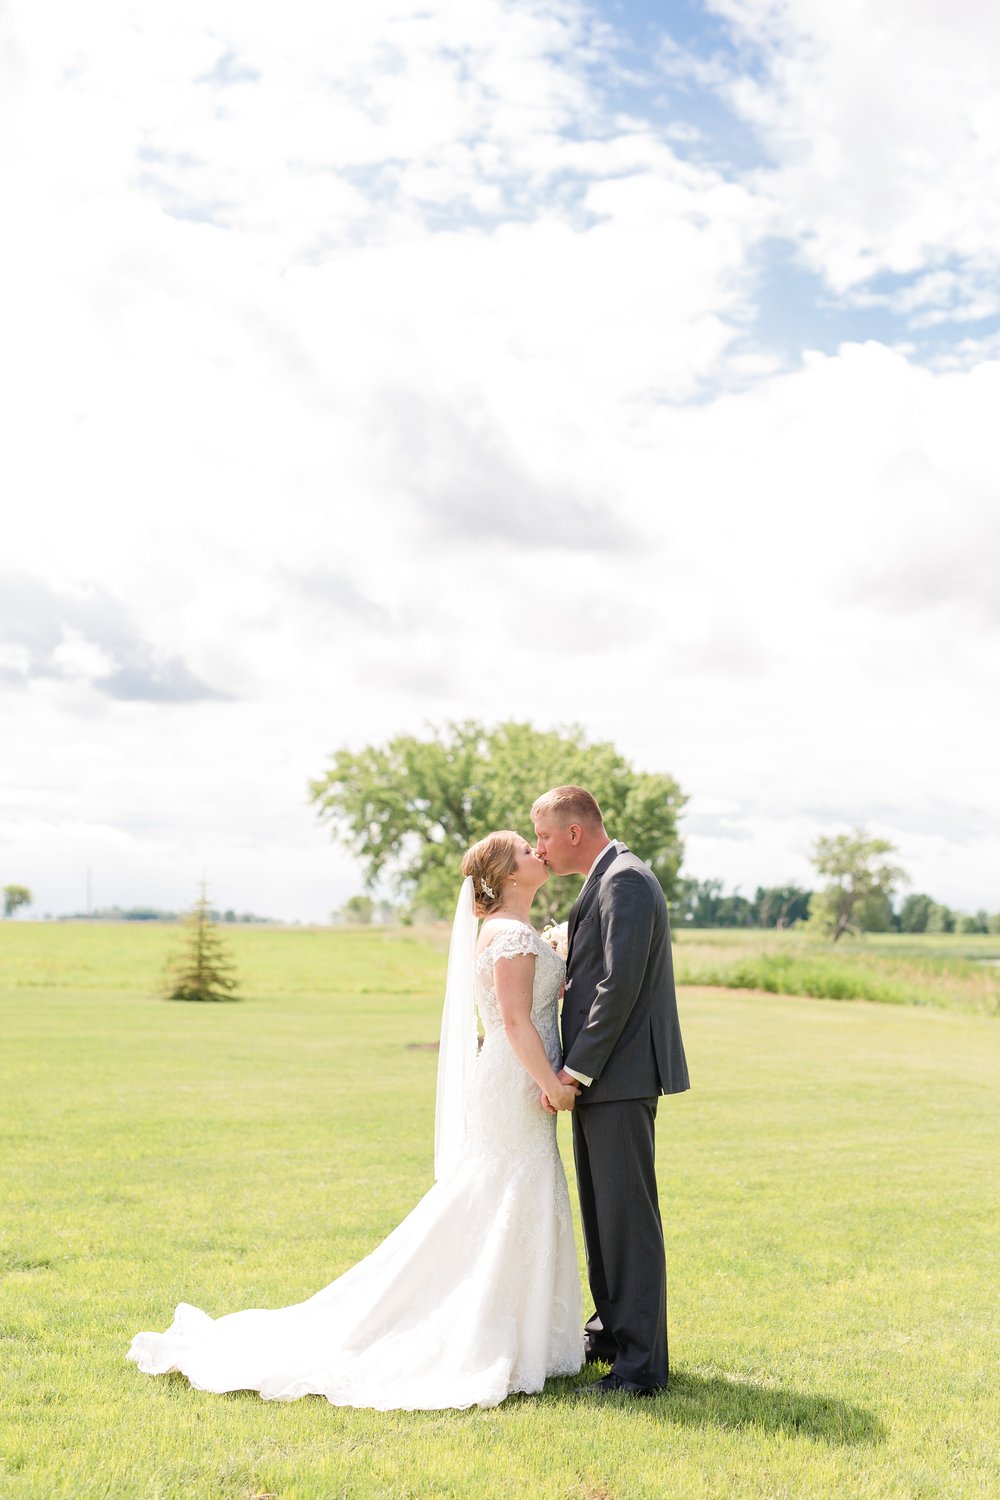 Country Styled, Rural, Ogema, Minnesota Church Wedding by Amber Langerud Photography | Andrea &amp; Steve